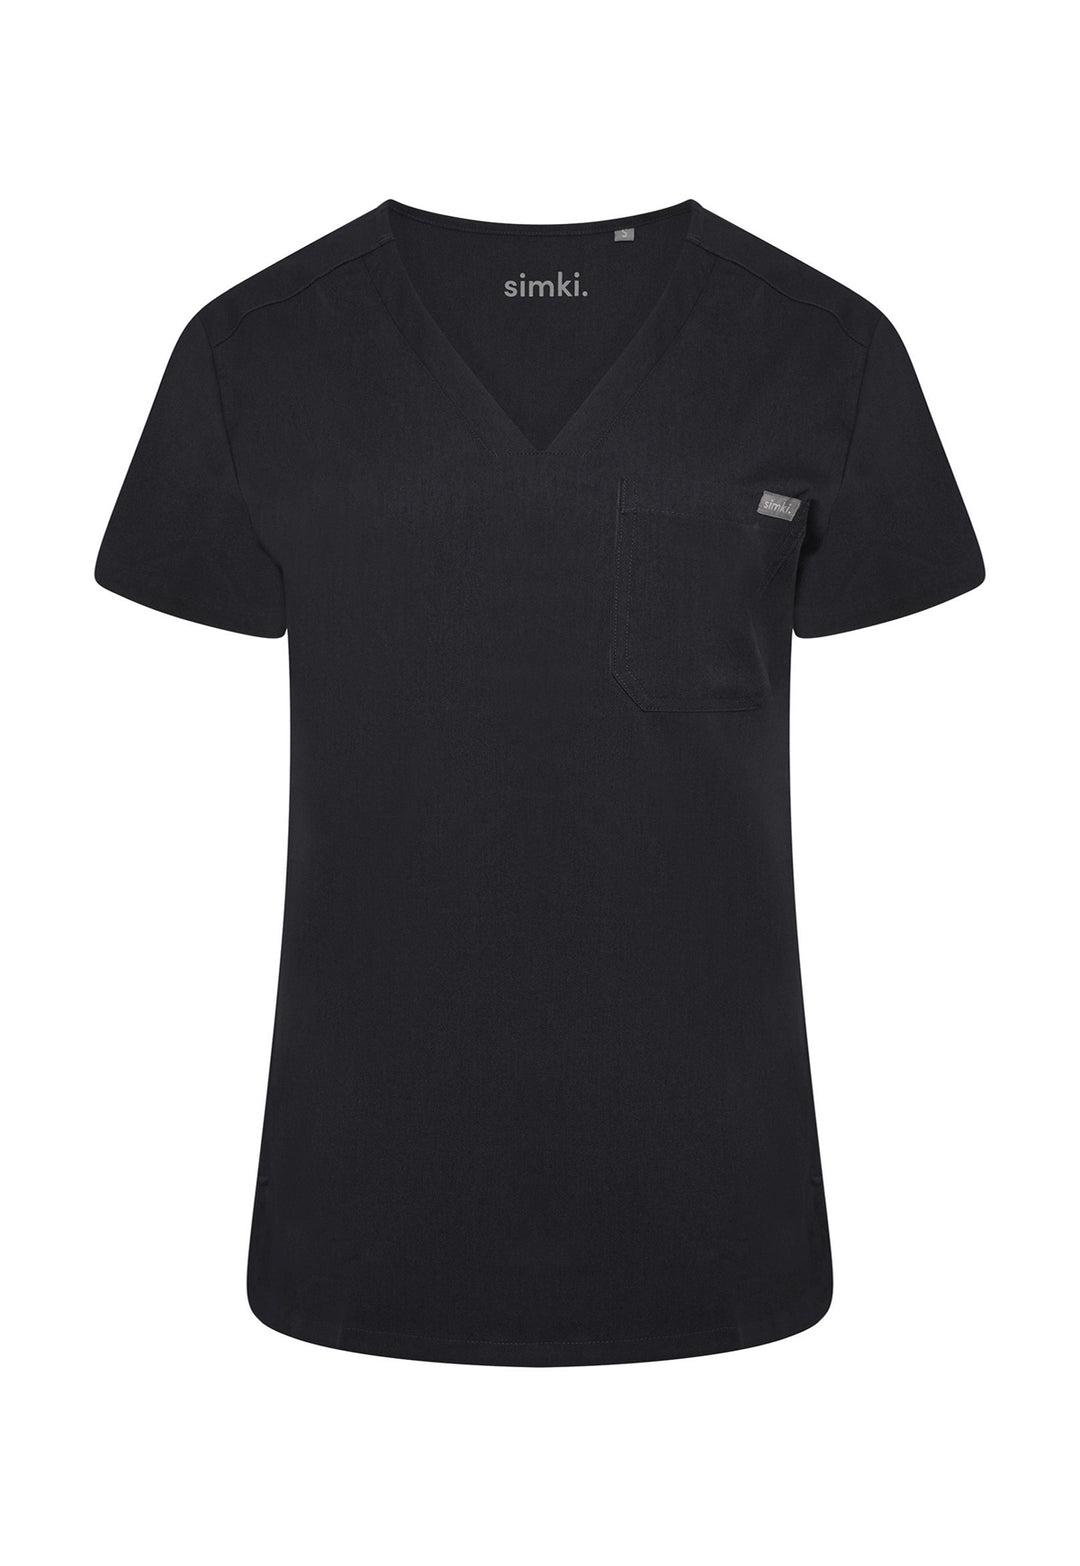 Simki Nova Scrub Top 4957 - The Work Uniform Company